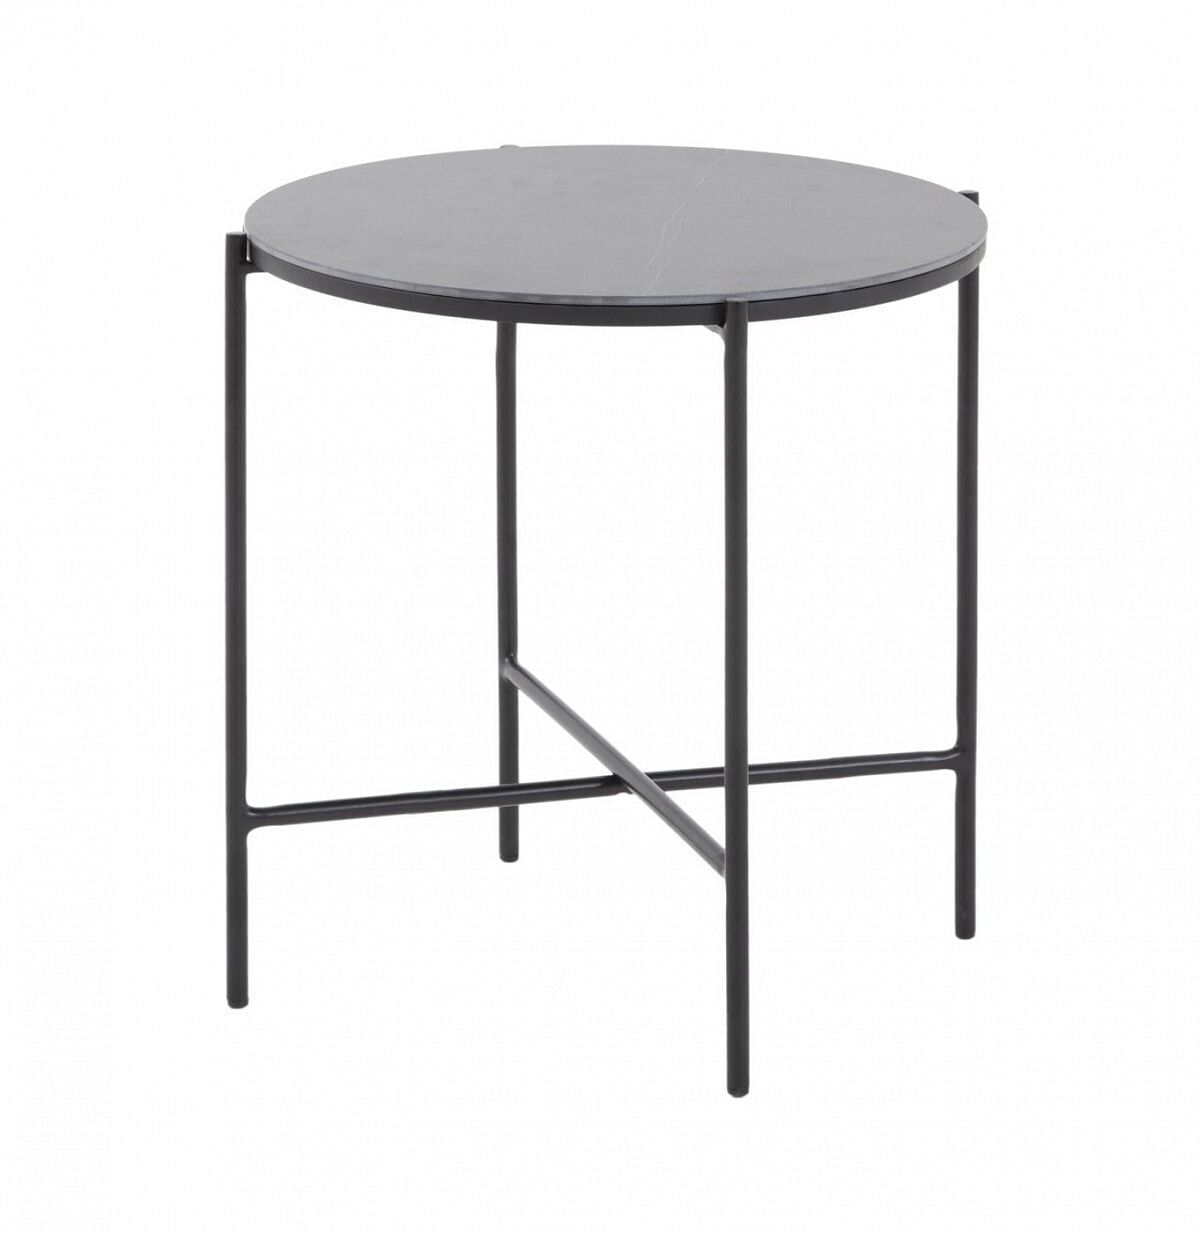 Modern Industrial Black Round Ceramic Table